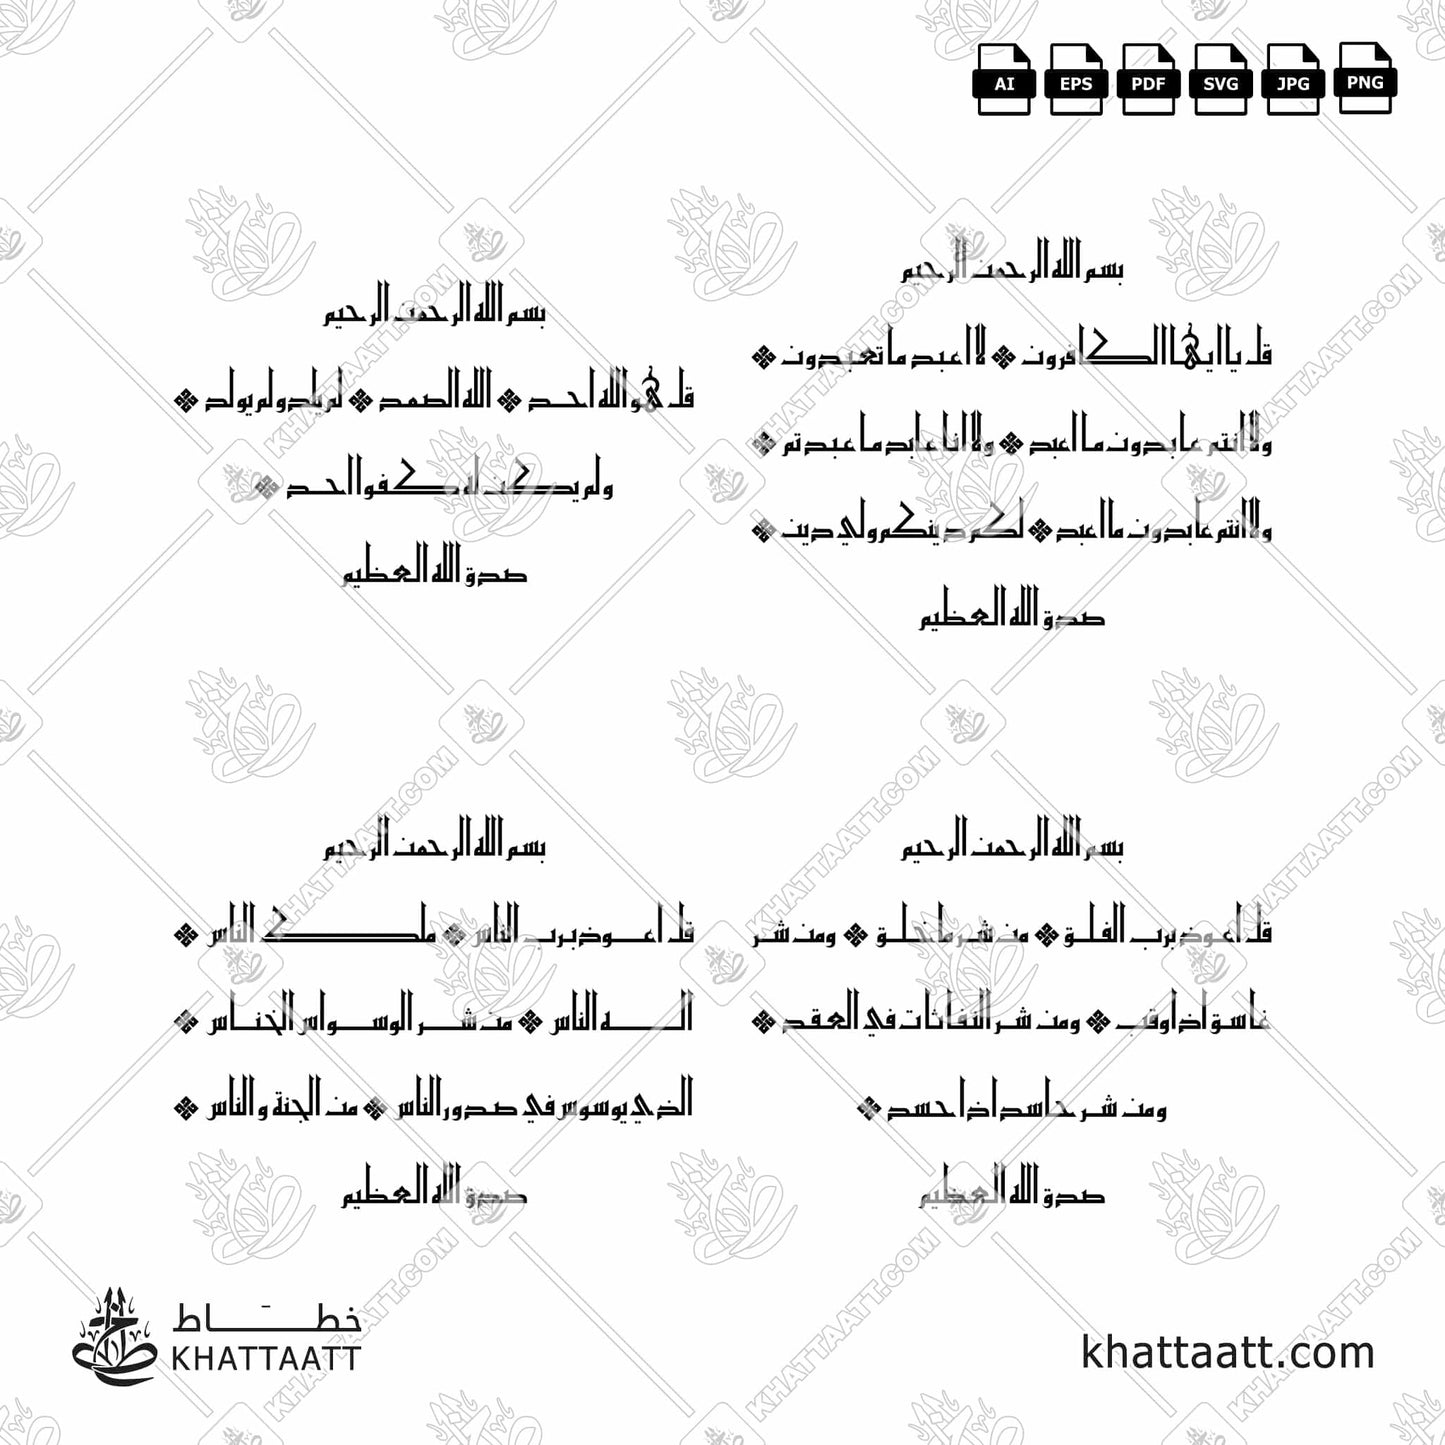 Download Arabic calligraphy تحميل مخطوطة خط عربي of The 4 Quls - القلاقل الأربعة (KE011) Kufi - الخط الكوفي in vector فيكتور and png